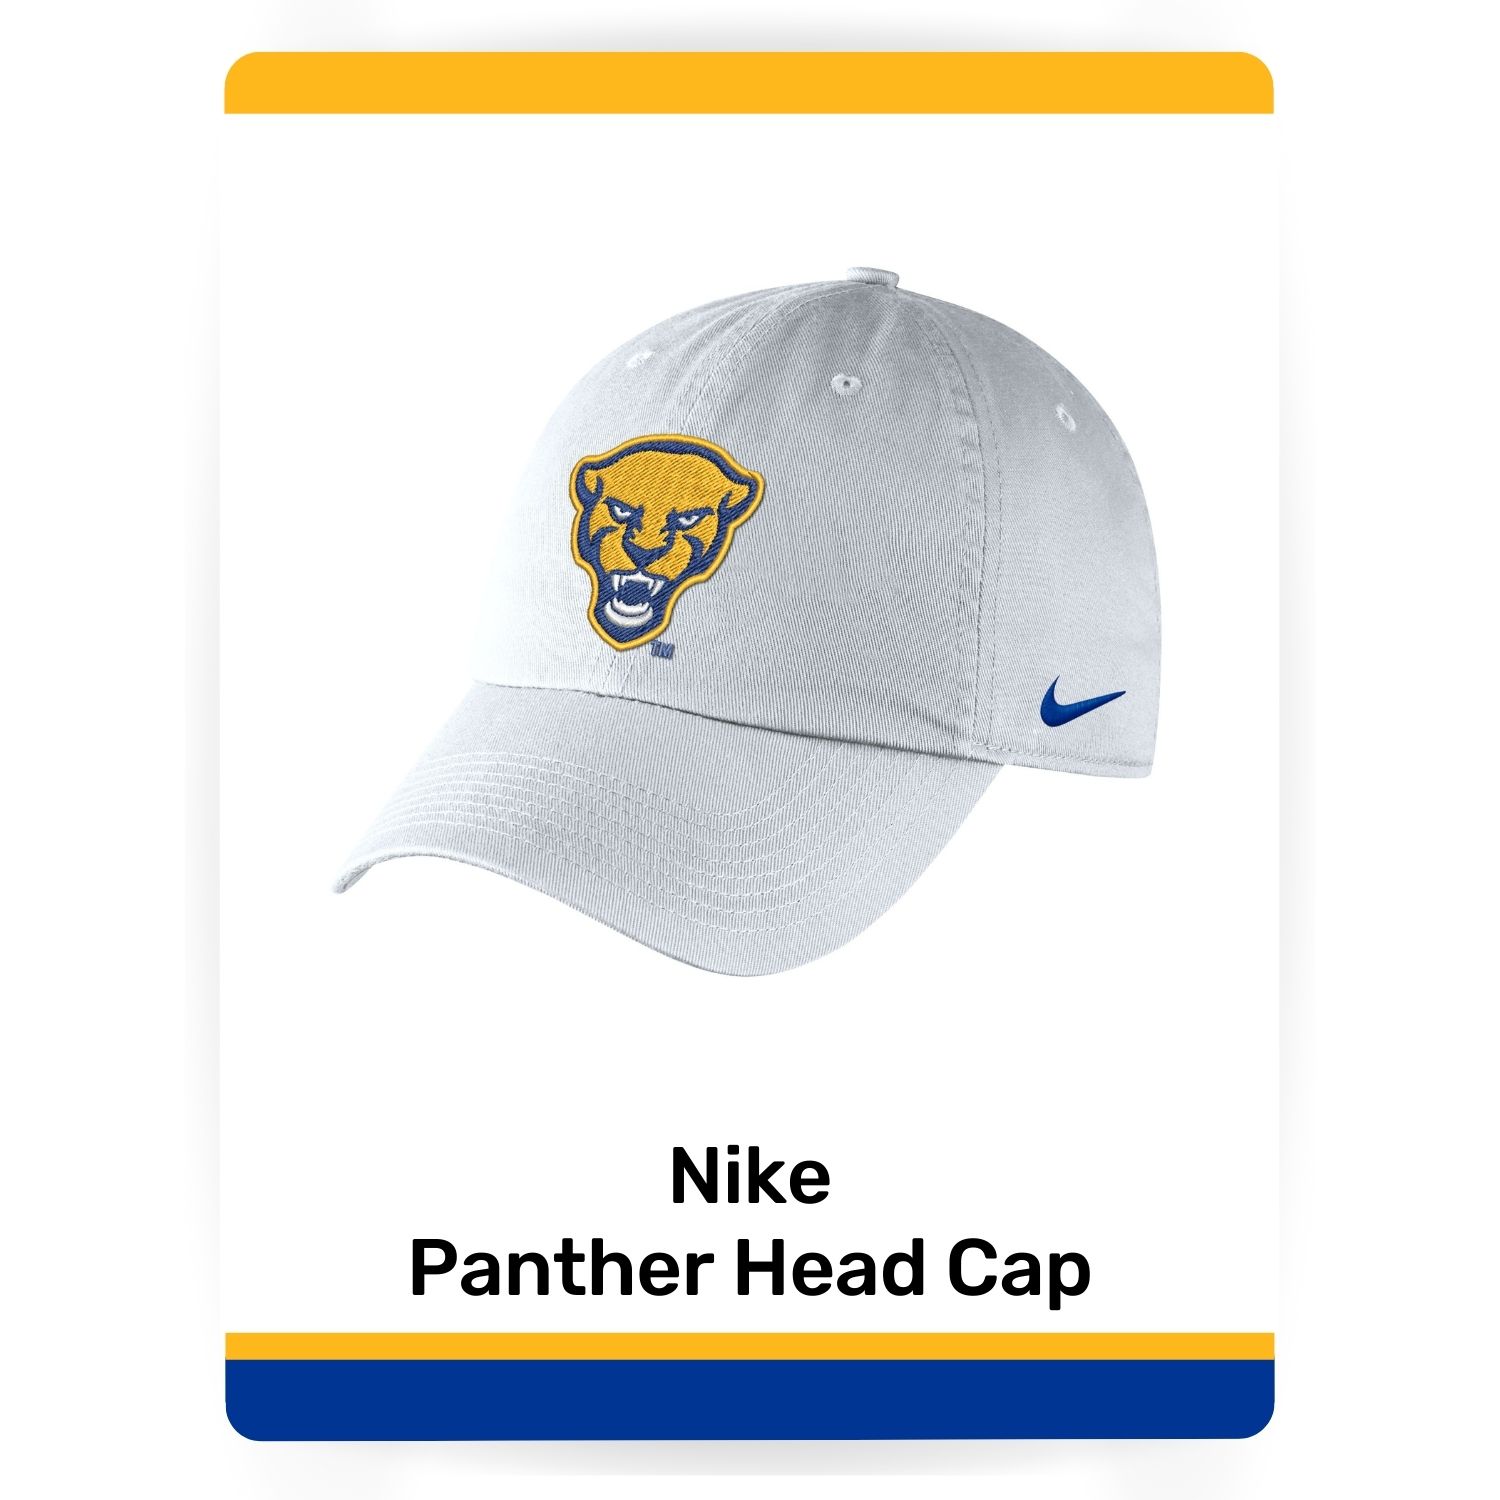 Nike Panther Head Cap